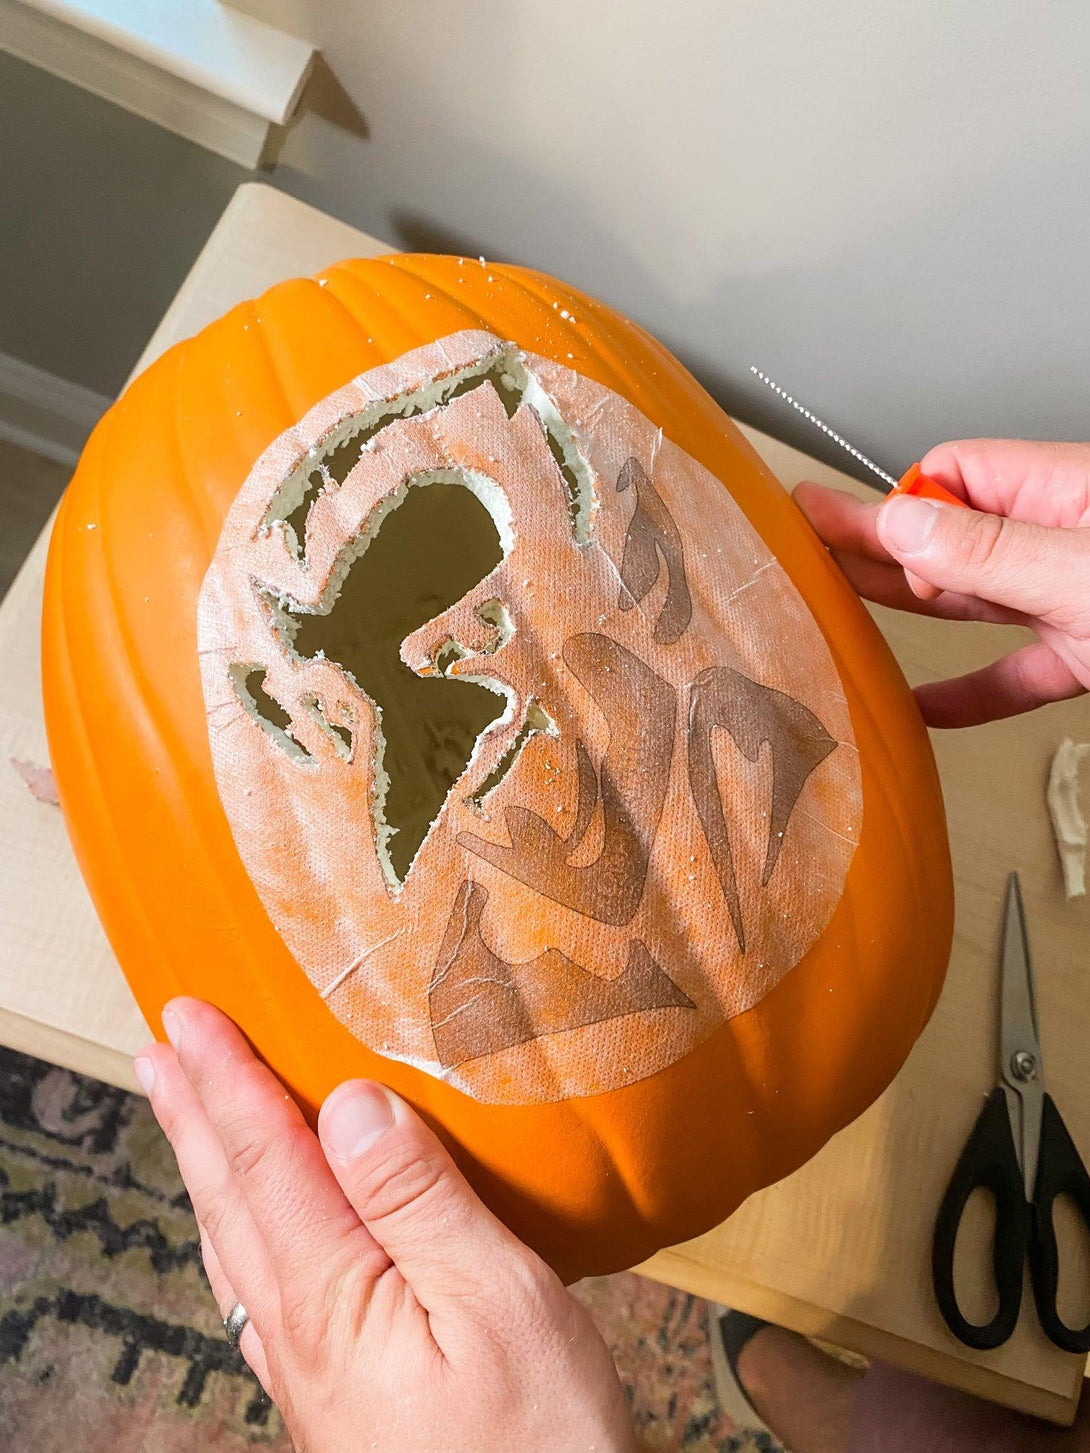 I Heart OH Pumpkin Carving Stencil - Pumpkin HQ